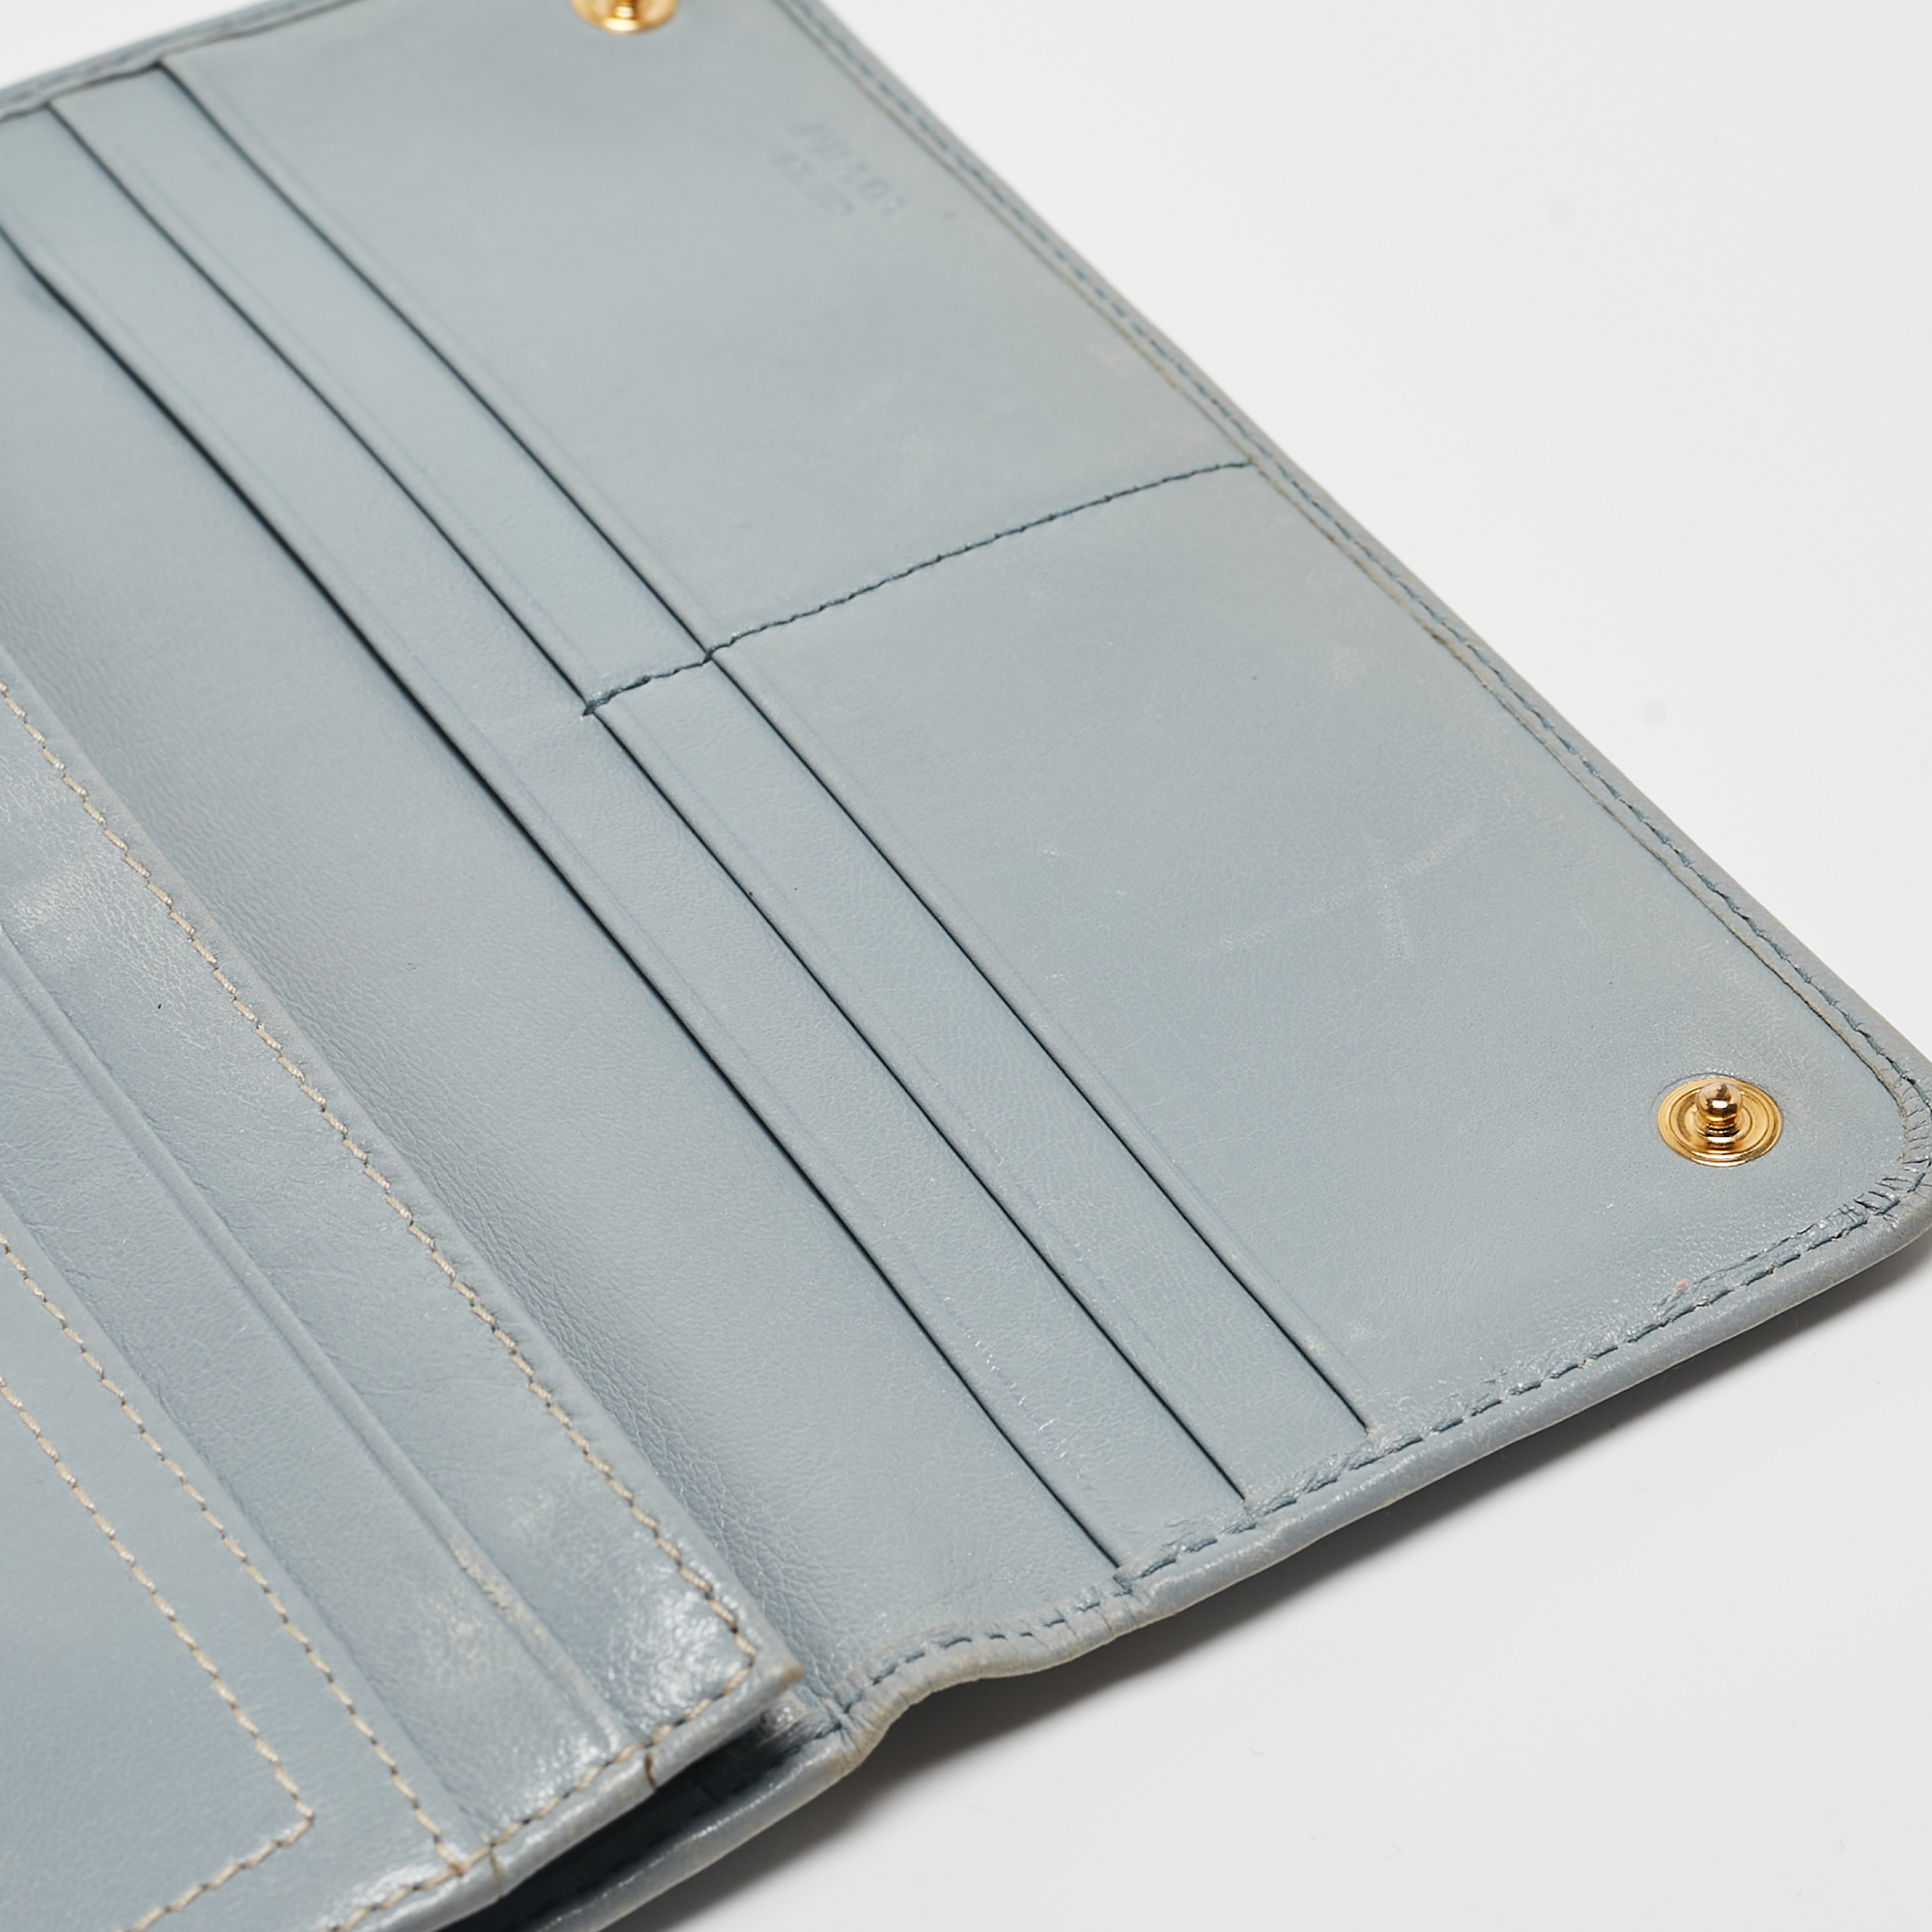 Prada Light Blue Leather Logo Flap Continental Wallet